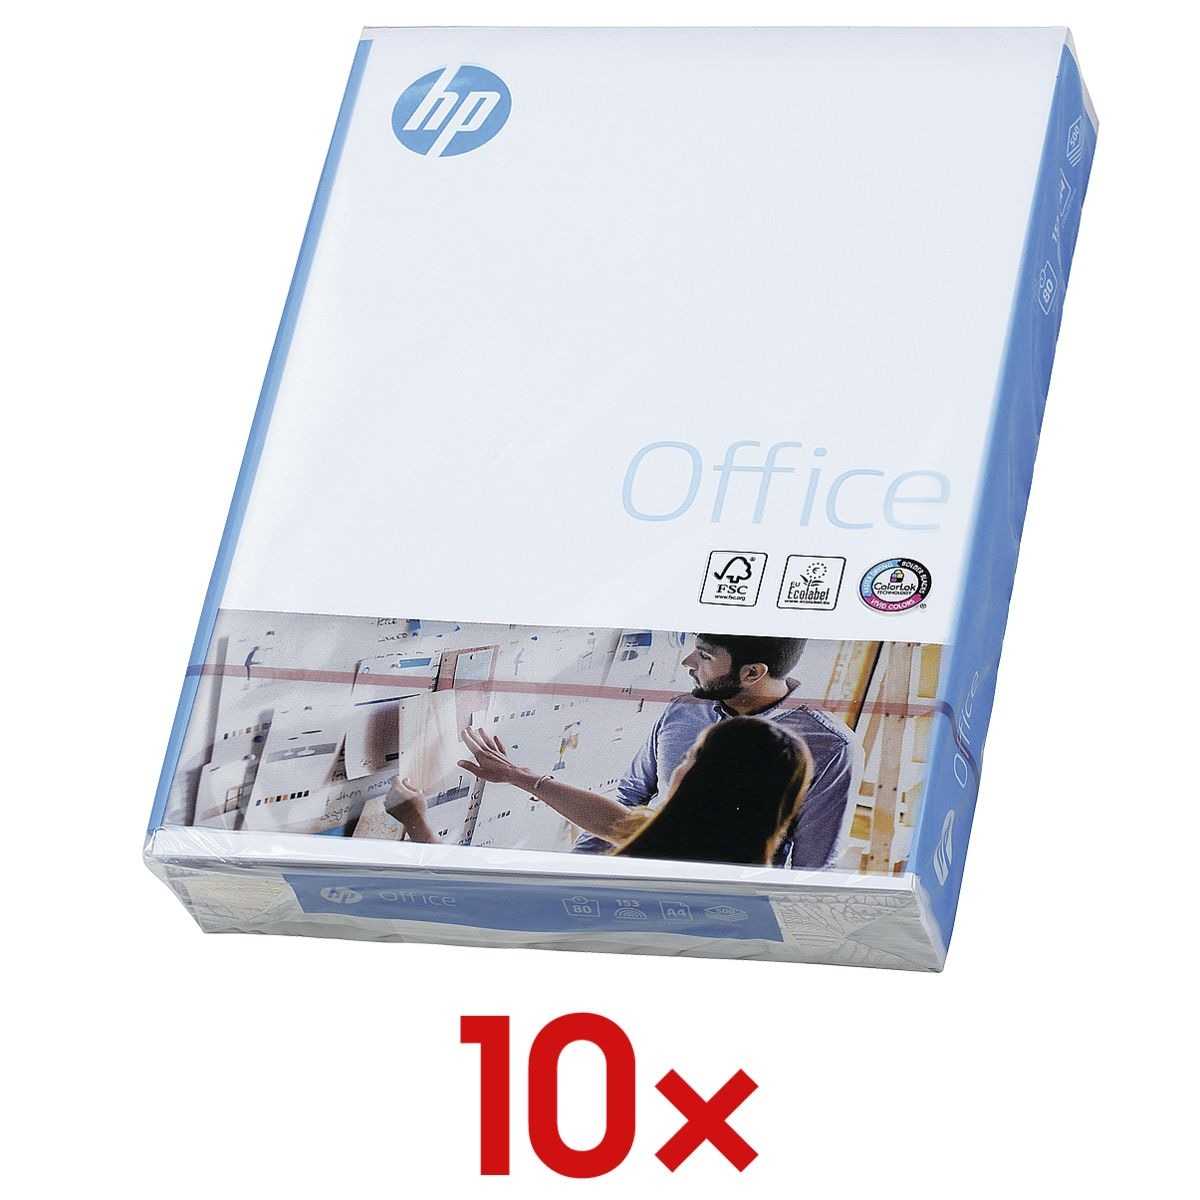 10x Multifunktionspapier A4 HP Office - 5000 Blatt gesamt, 80g/qm